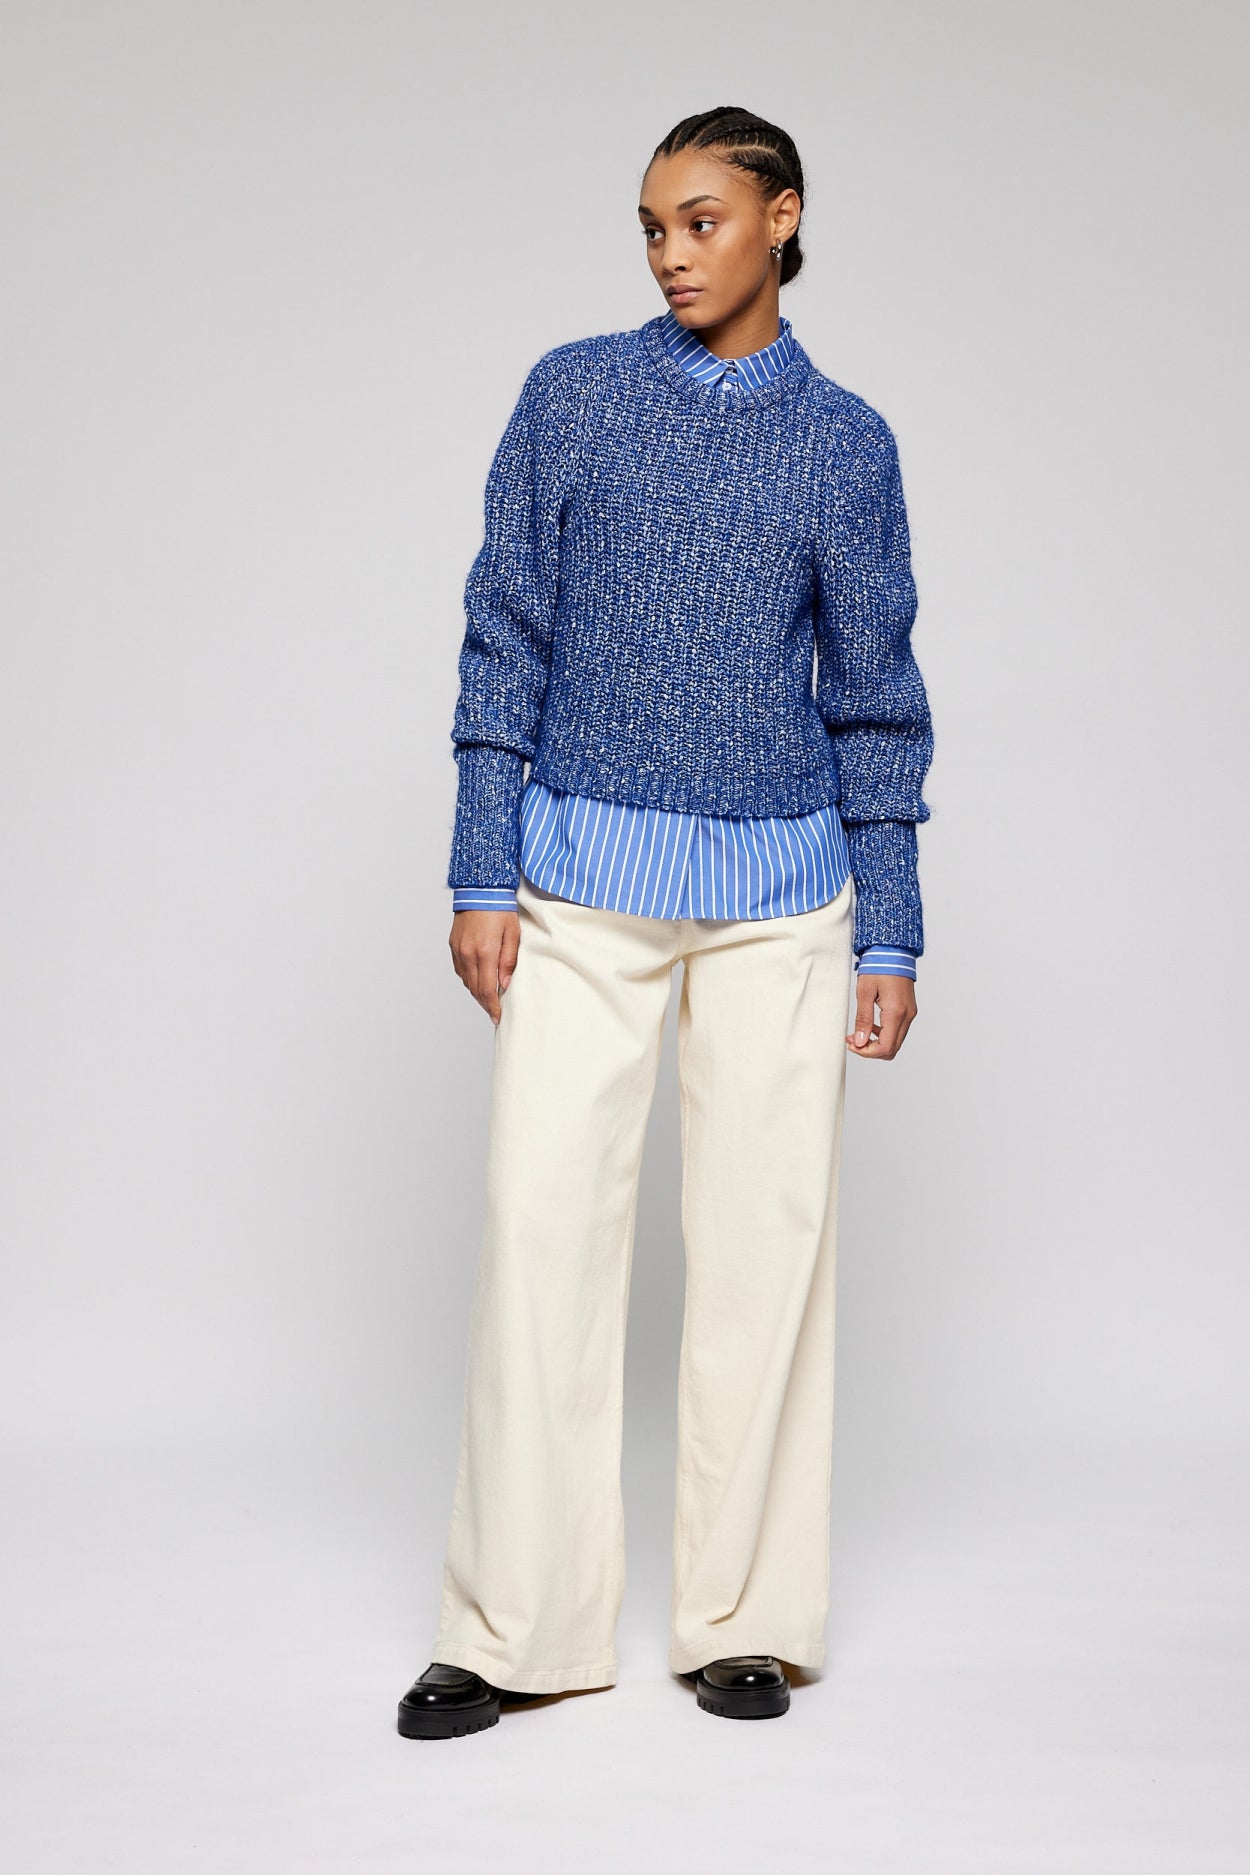 KANTA pullover | GREYISH BLUE